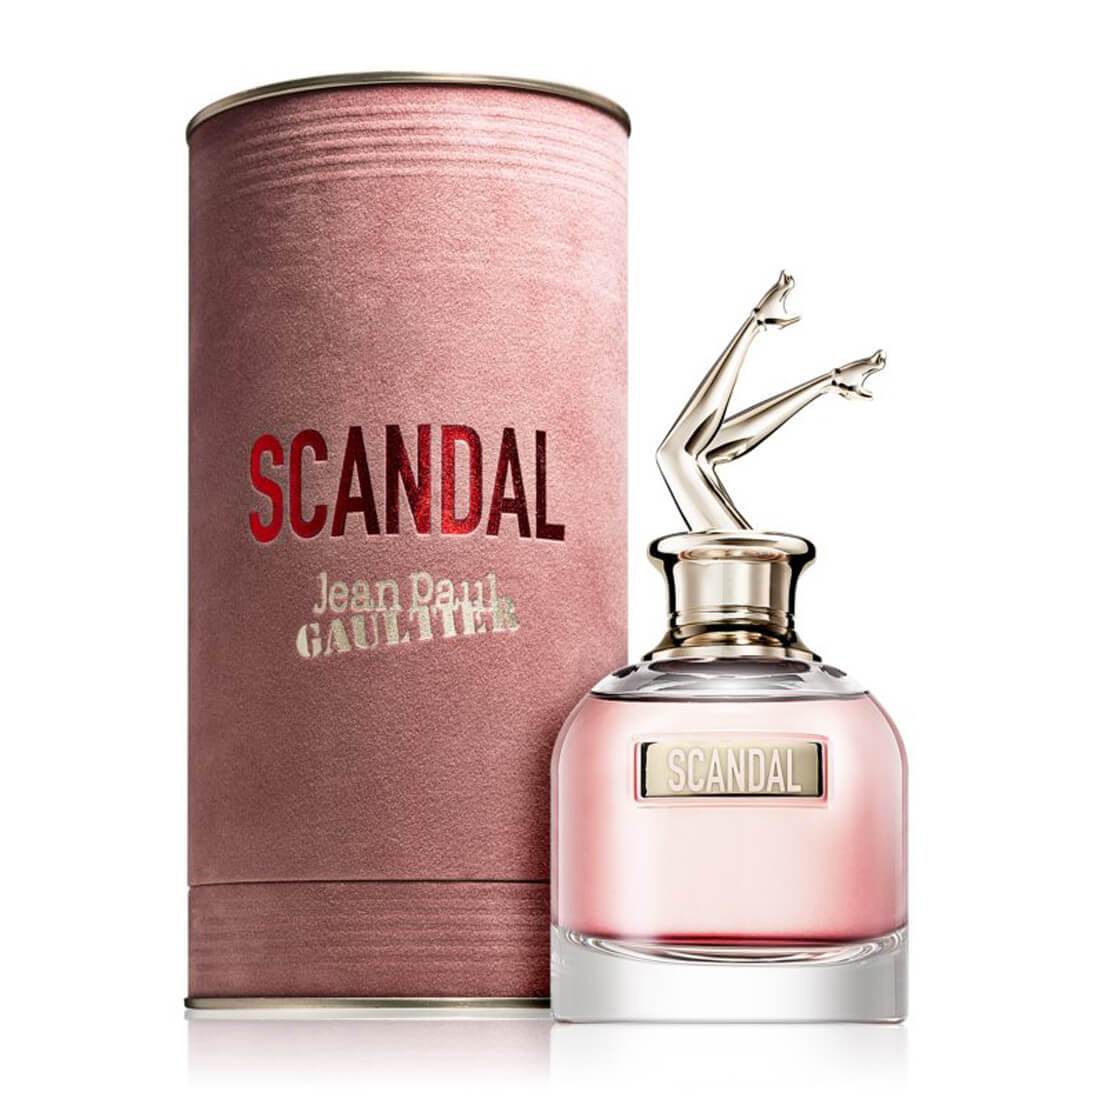 Jean Paul Gaultier Scandal EDP & Body Lotion Indulgence Set | My Perfume Shop Australia